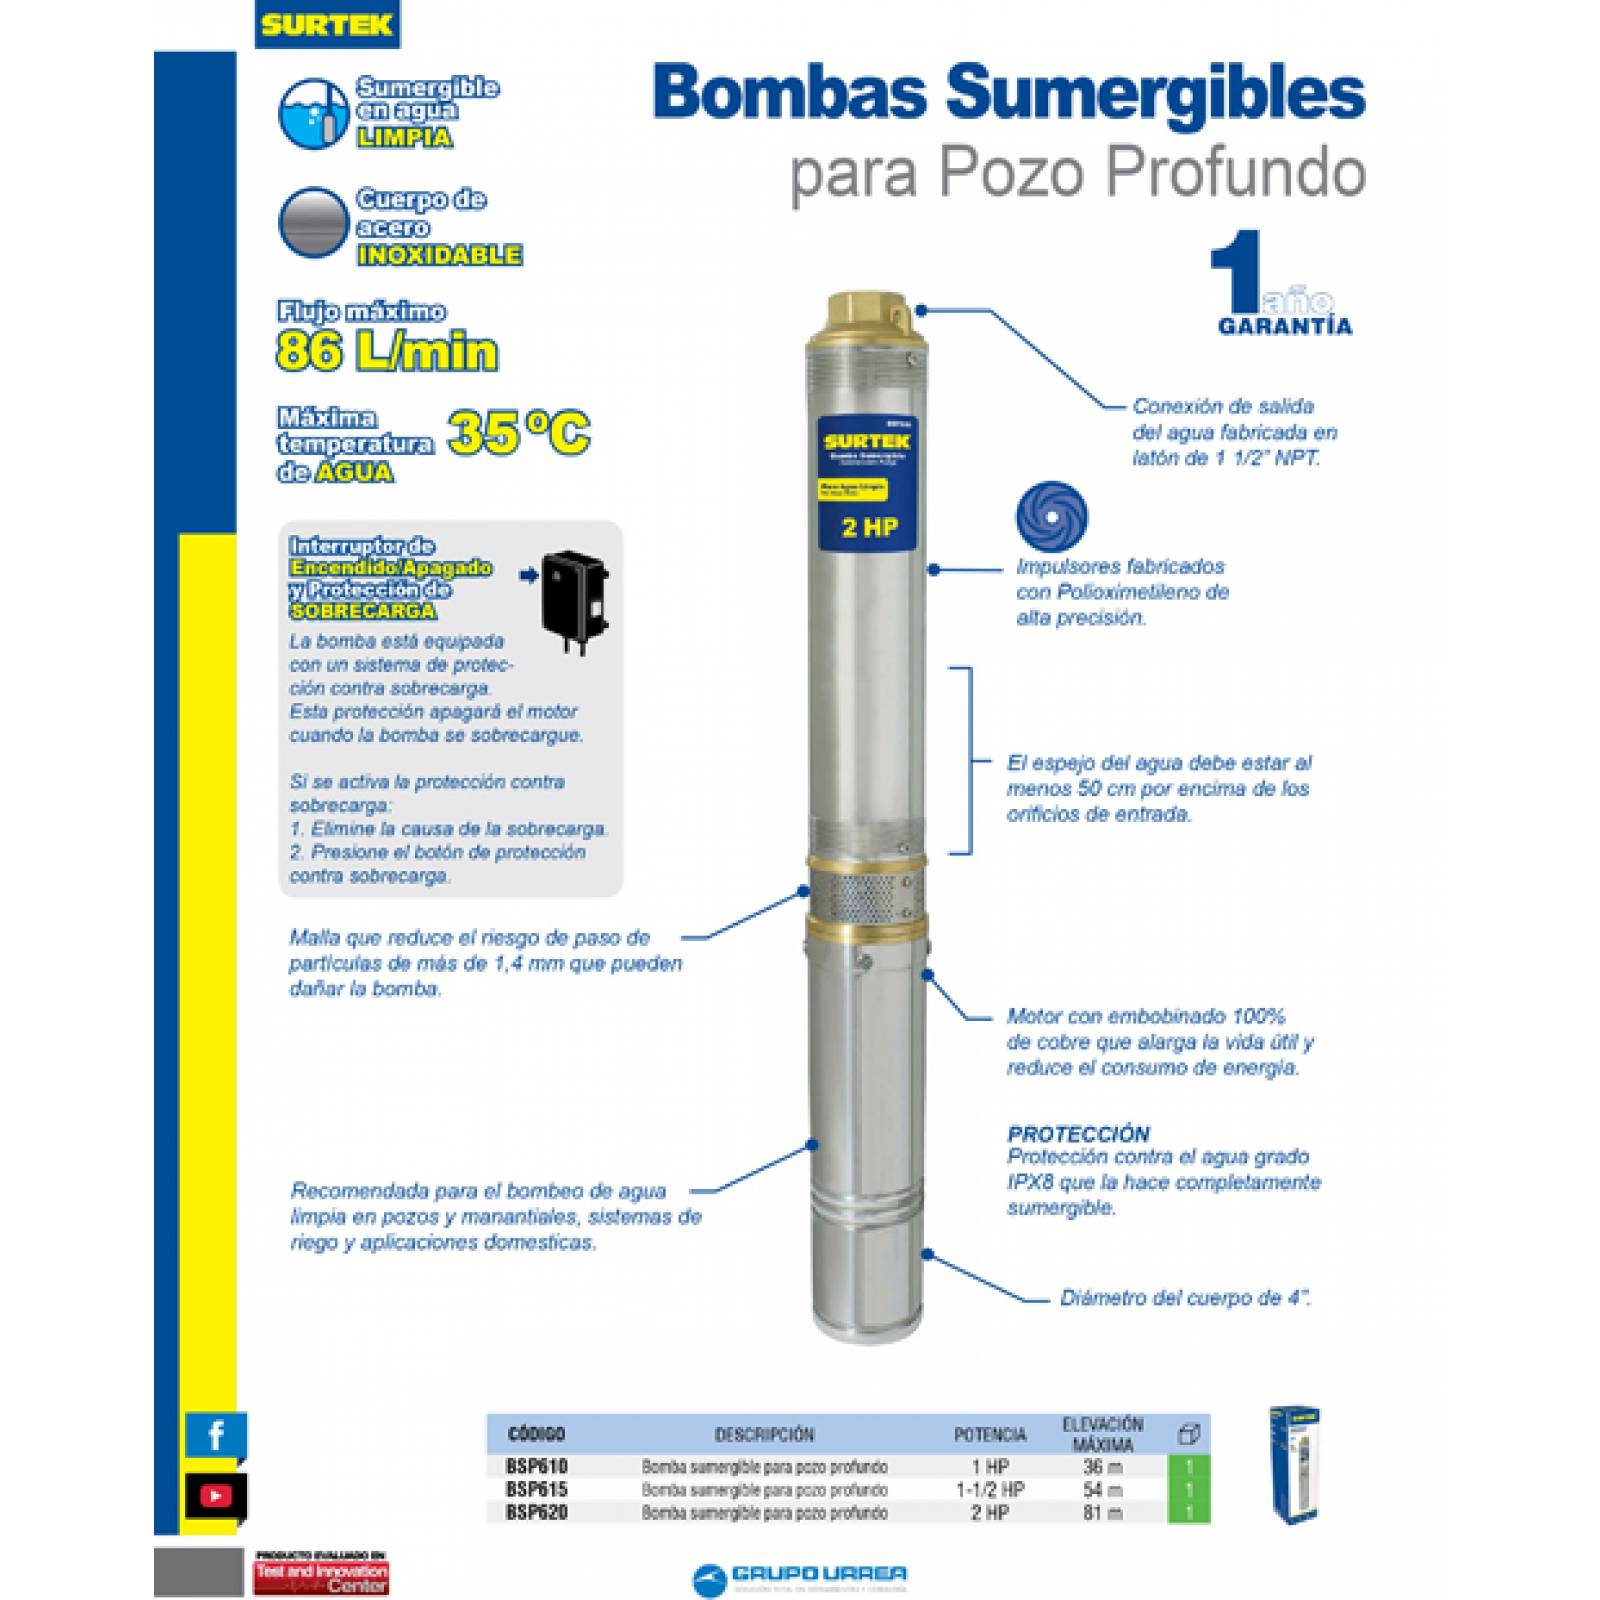 Bomba Sumergible Pozo Profundo 2 Hp Bsp620 Surtek 